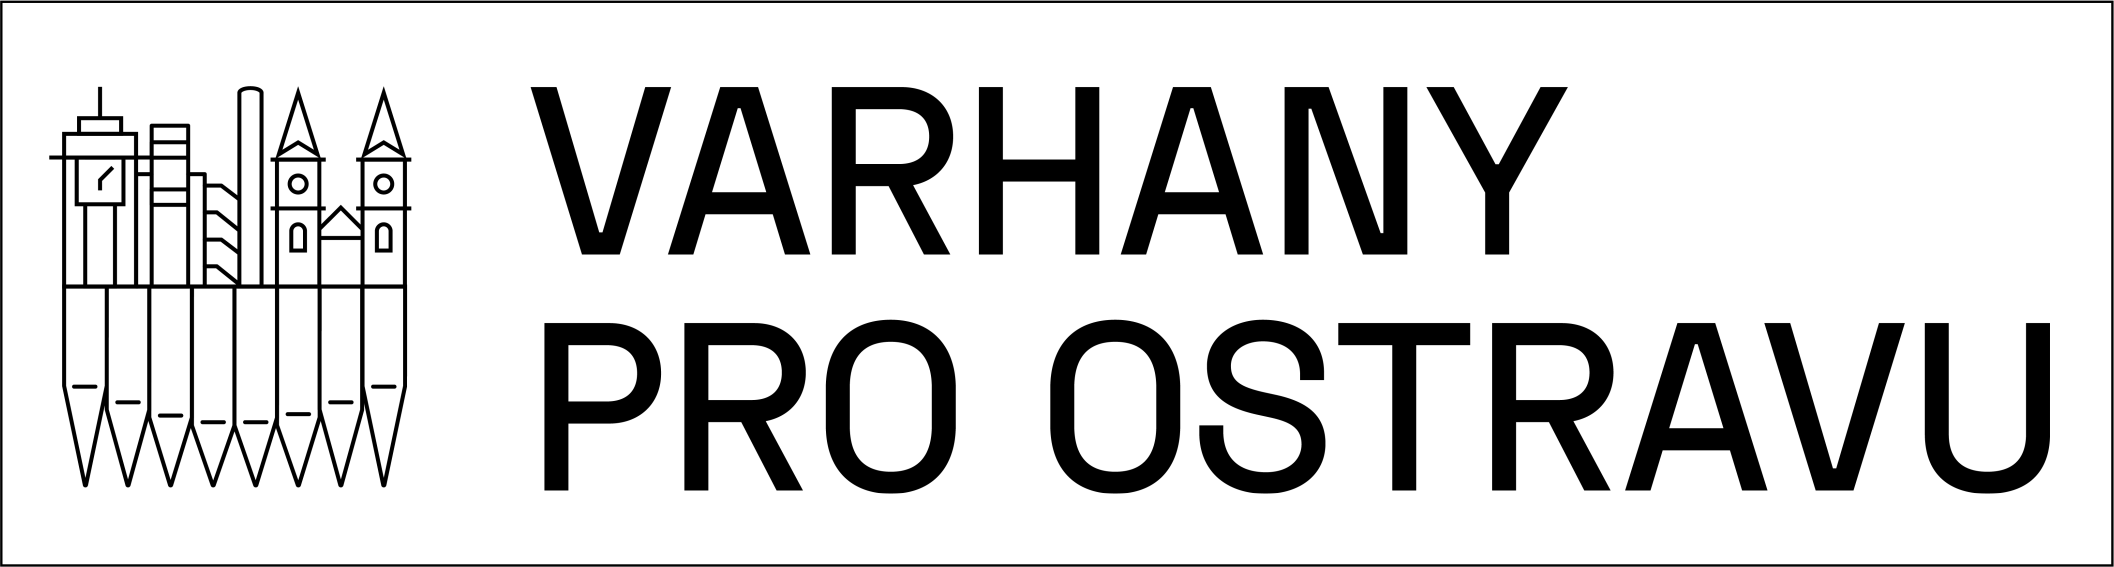 VPO logo horizontal black